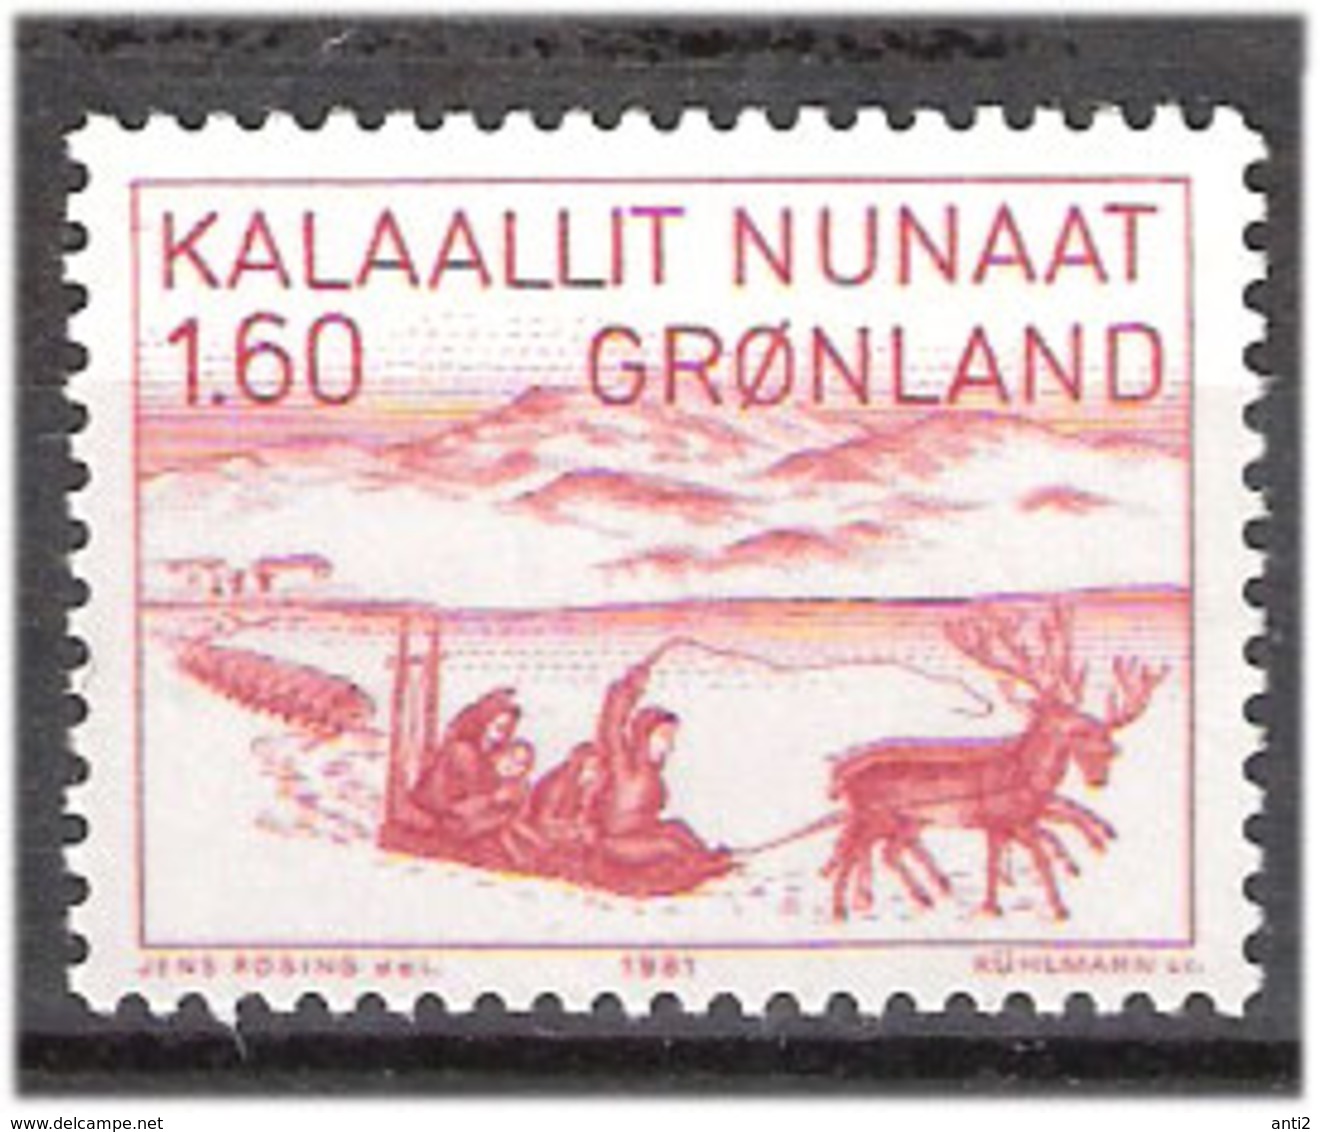 Greenland 1981 Sleigh Ride Northern Canada; Illustration By Jens Kreutzmann (1828-1899) Greenland Saga  Mi 128, MNH(**) - Lettres & Documents